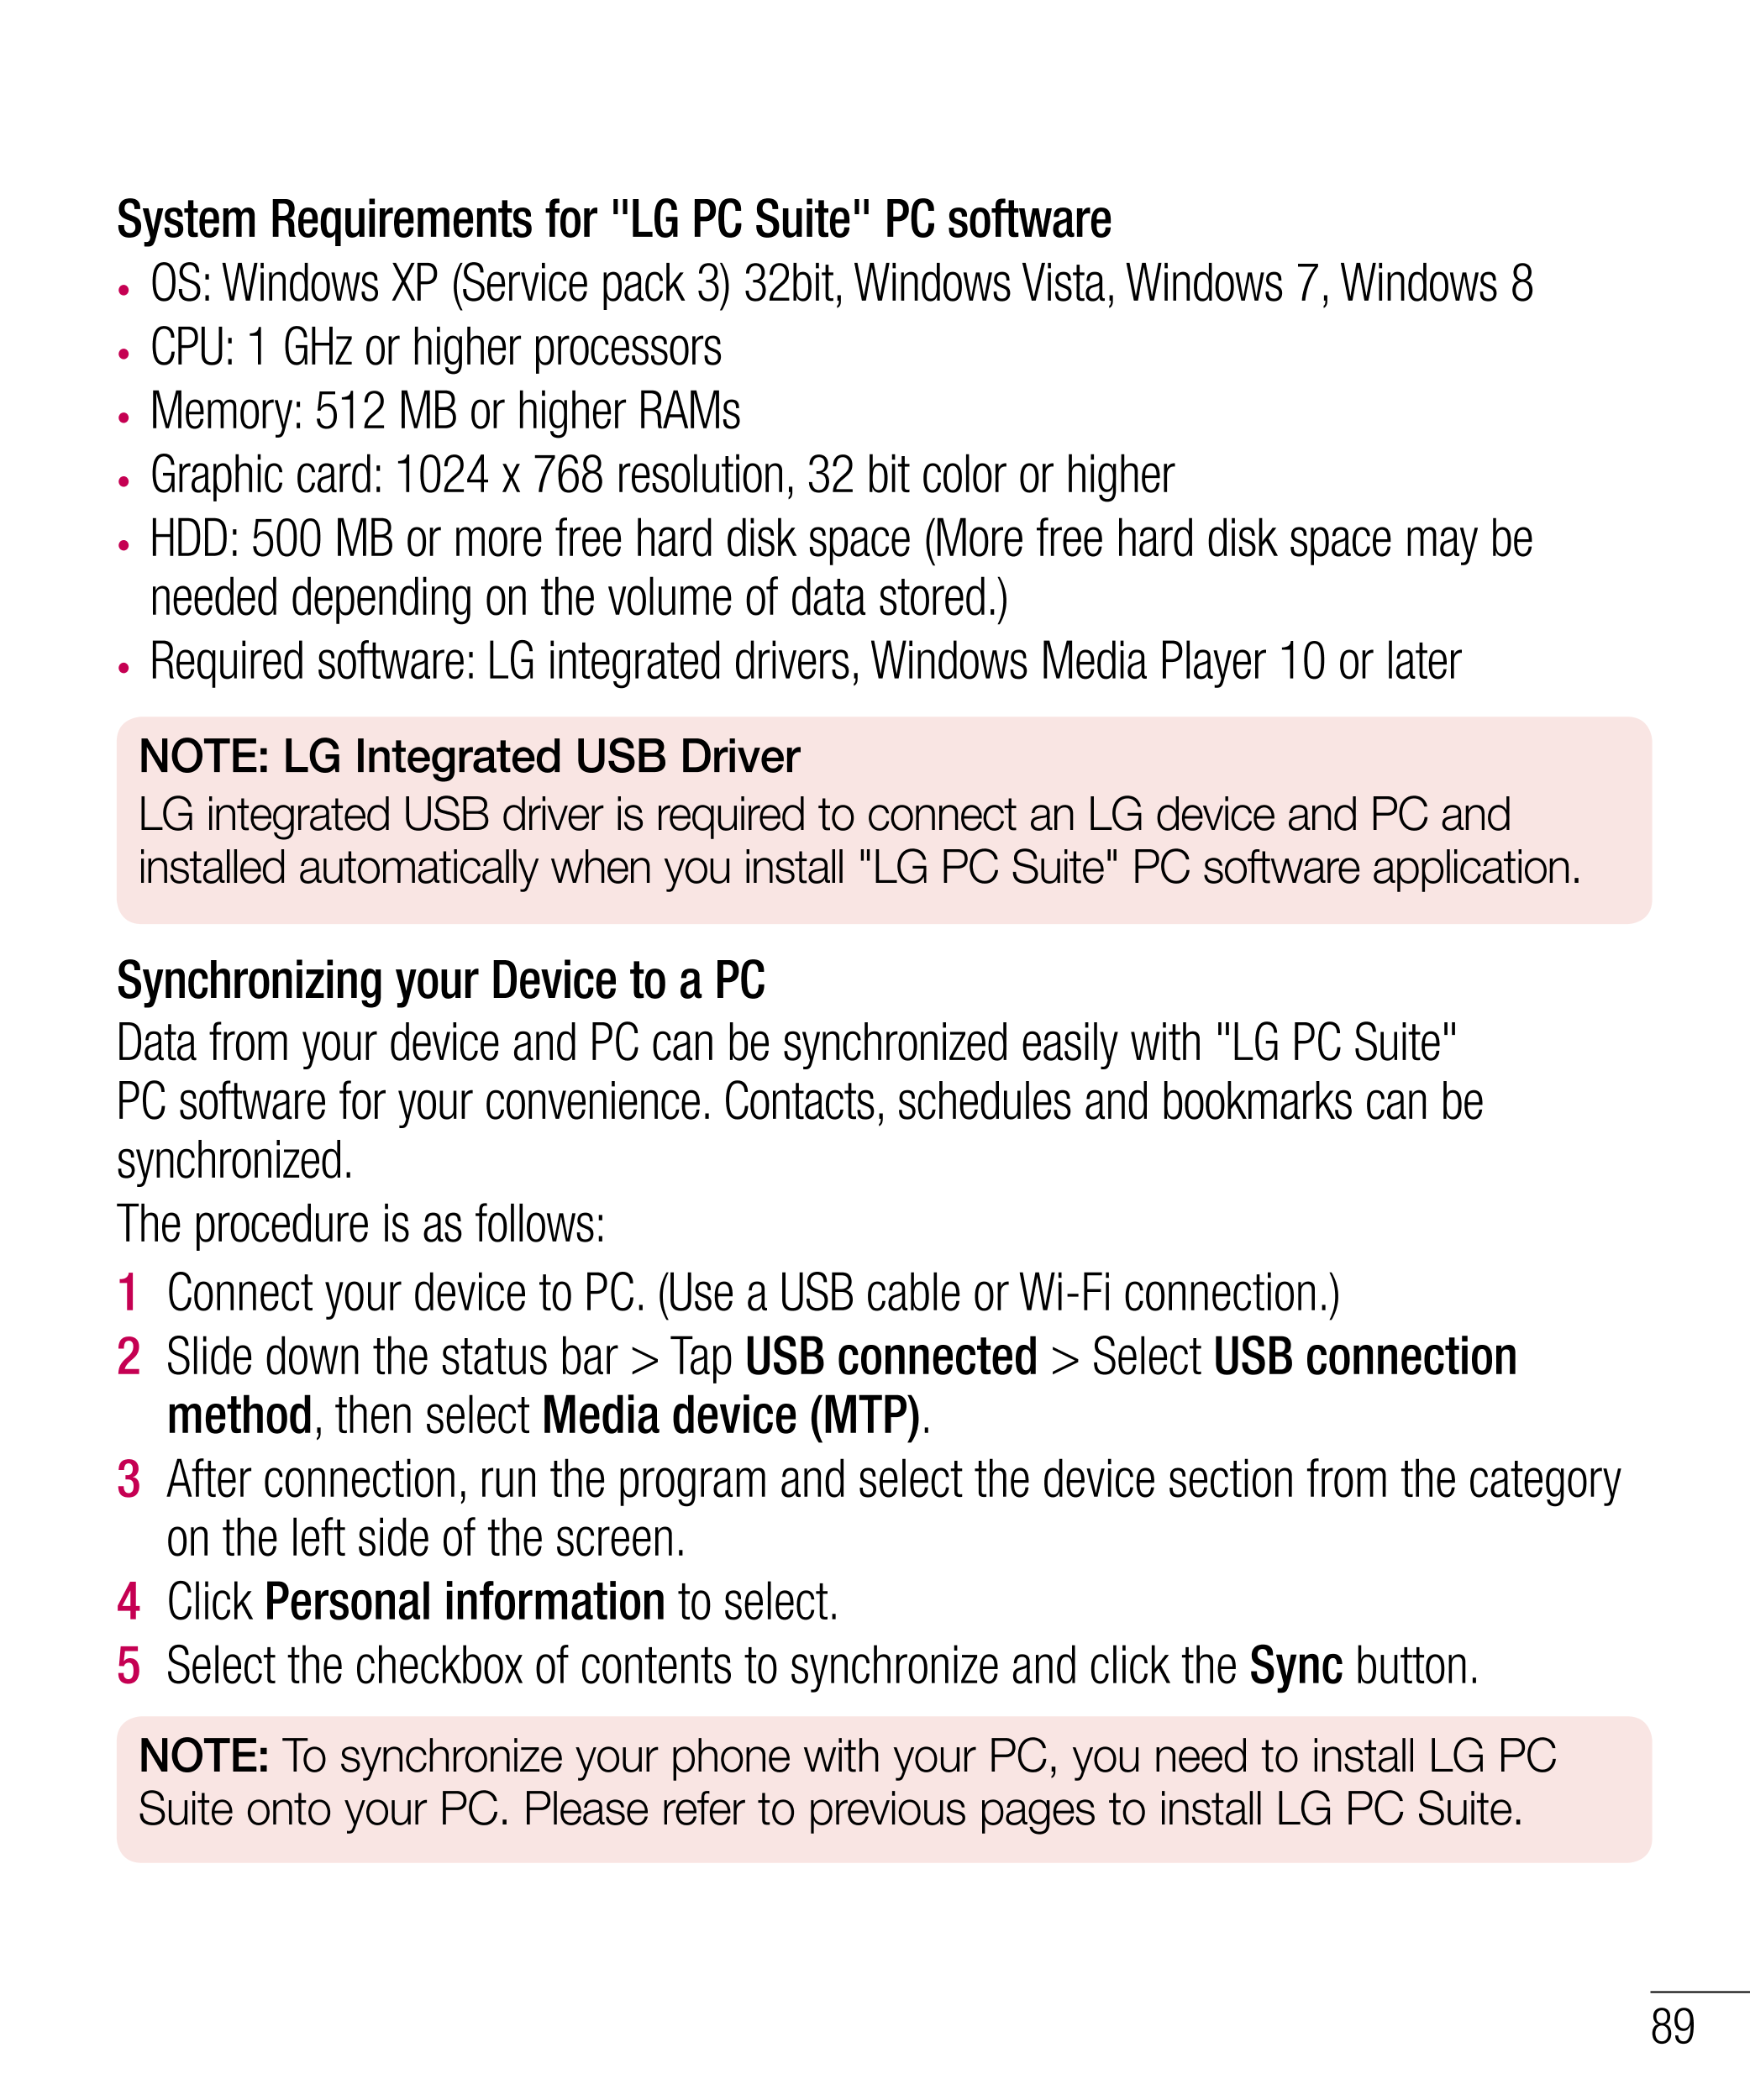 System Requirements for "LG PC Suite" PC software
•  OS: Windows XP (Service pack 3) 32bit, Windows Vista, Windows 7, Windows 8
